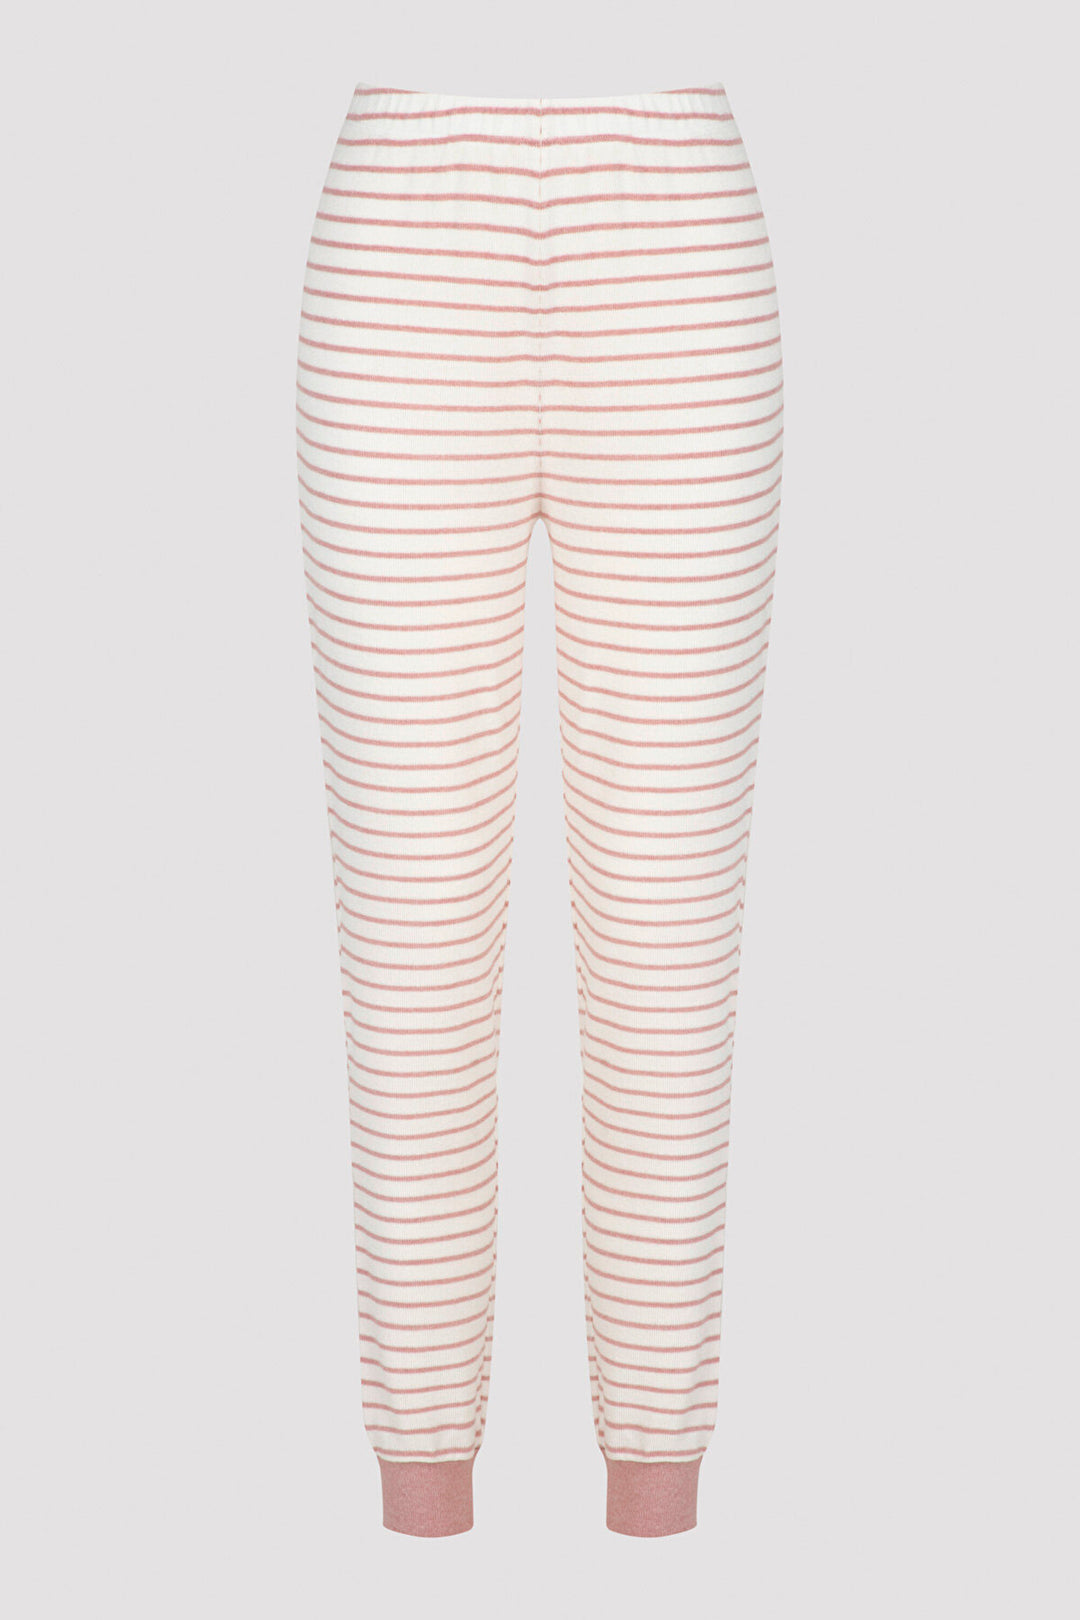 Orange Beanies Striped Pink Cuff Thermal Pants